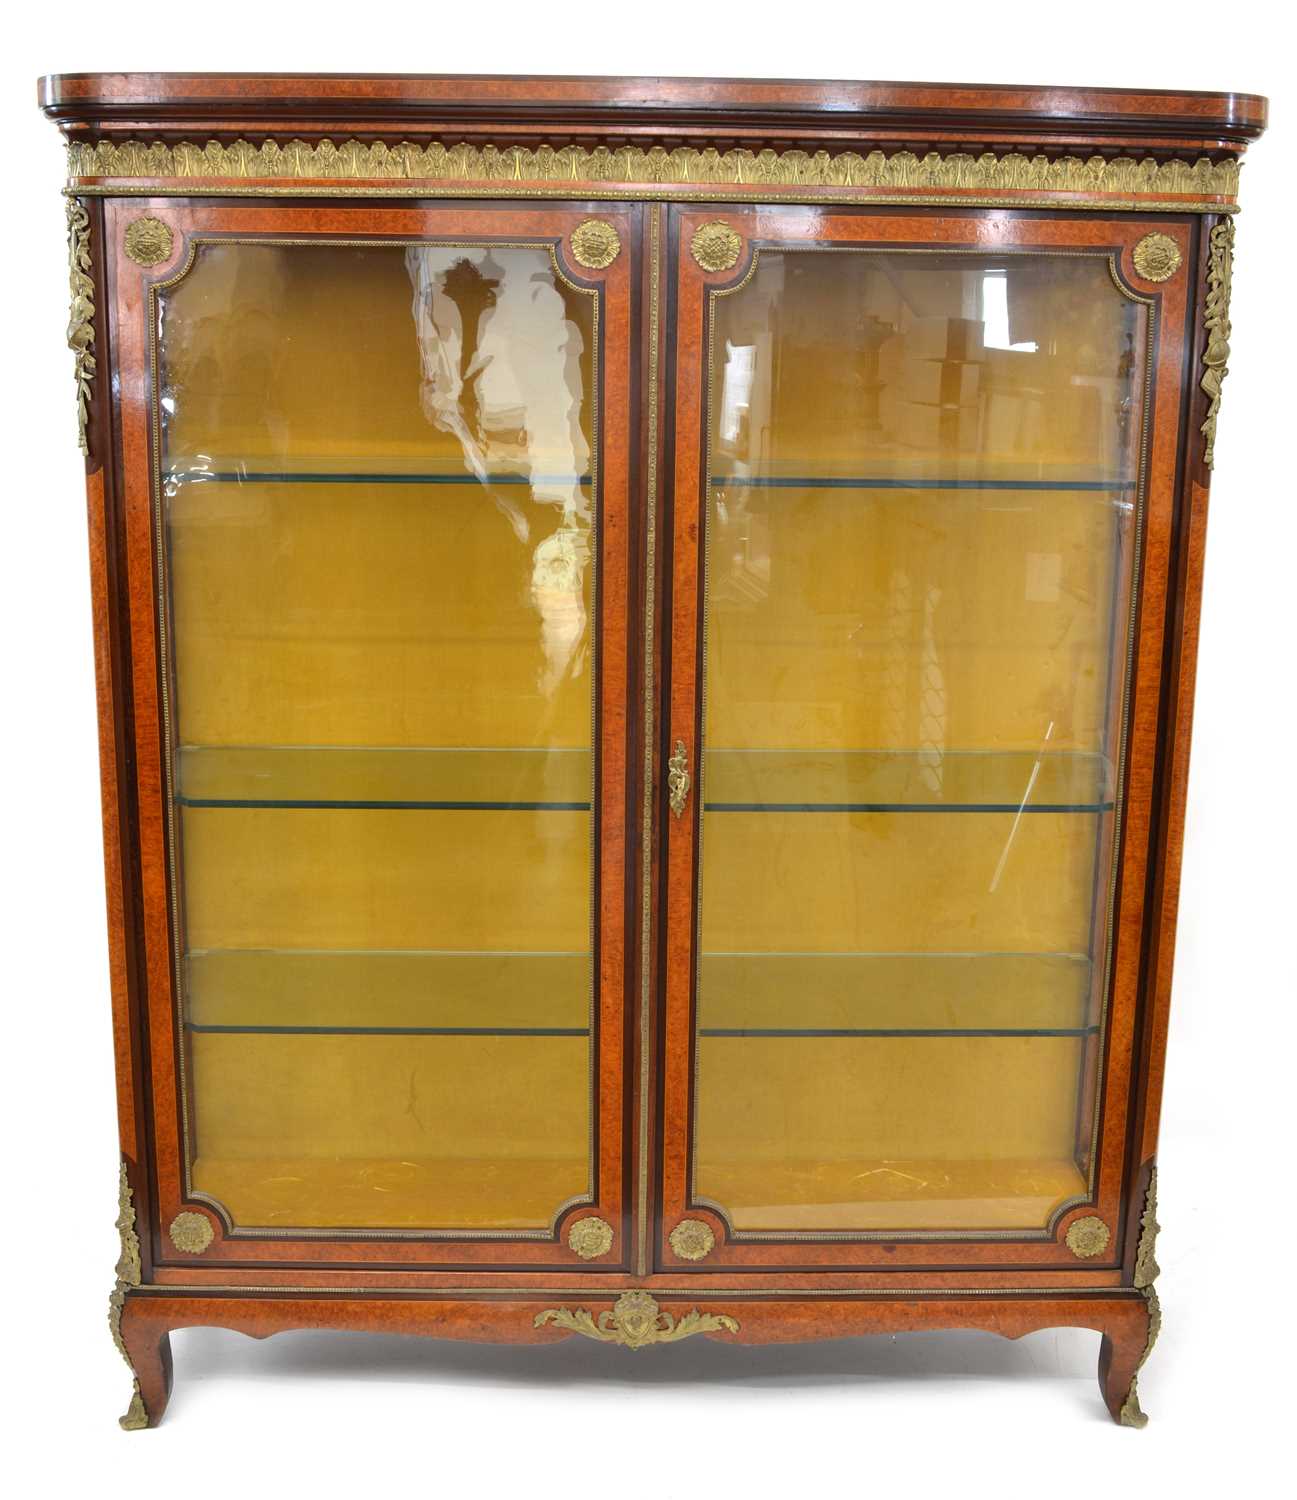 310 - Mid 19th century display cabinet